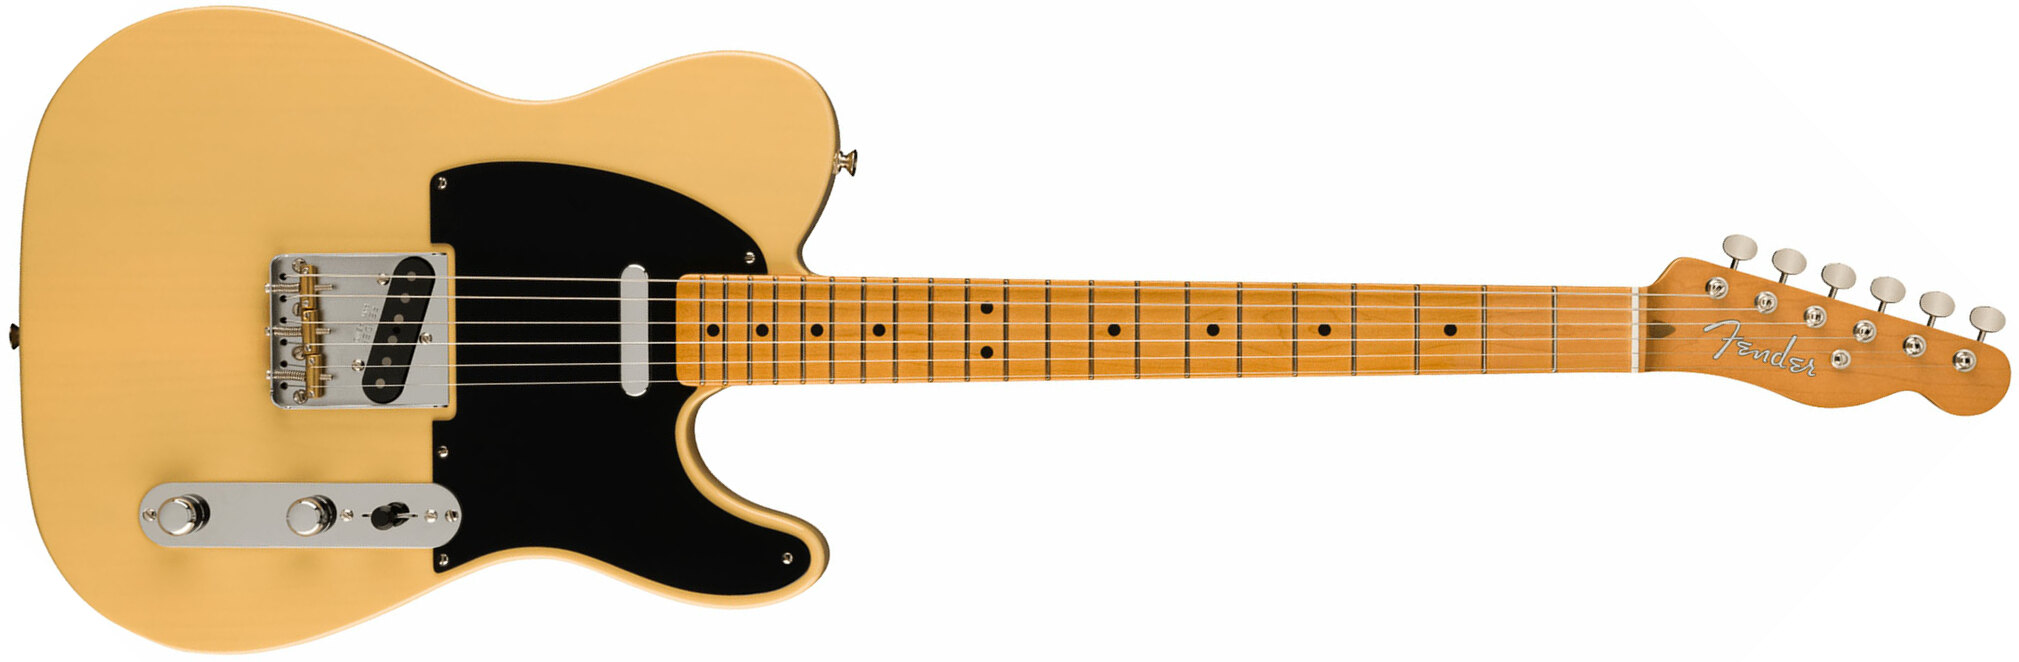 Fender Tele Nocaster 50s Vintera 2 Mex 2s Ht Mn - Blackguard Blonde - Televorm elektrische gitaar - Main picture